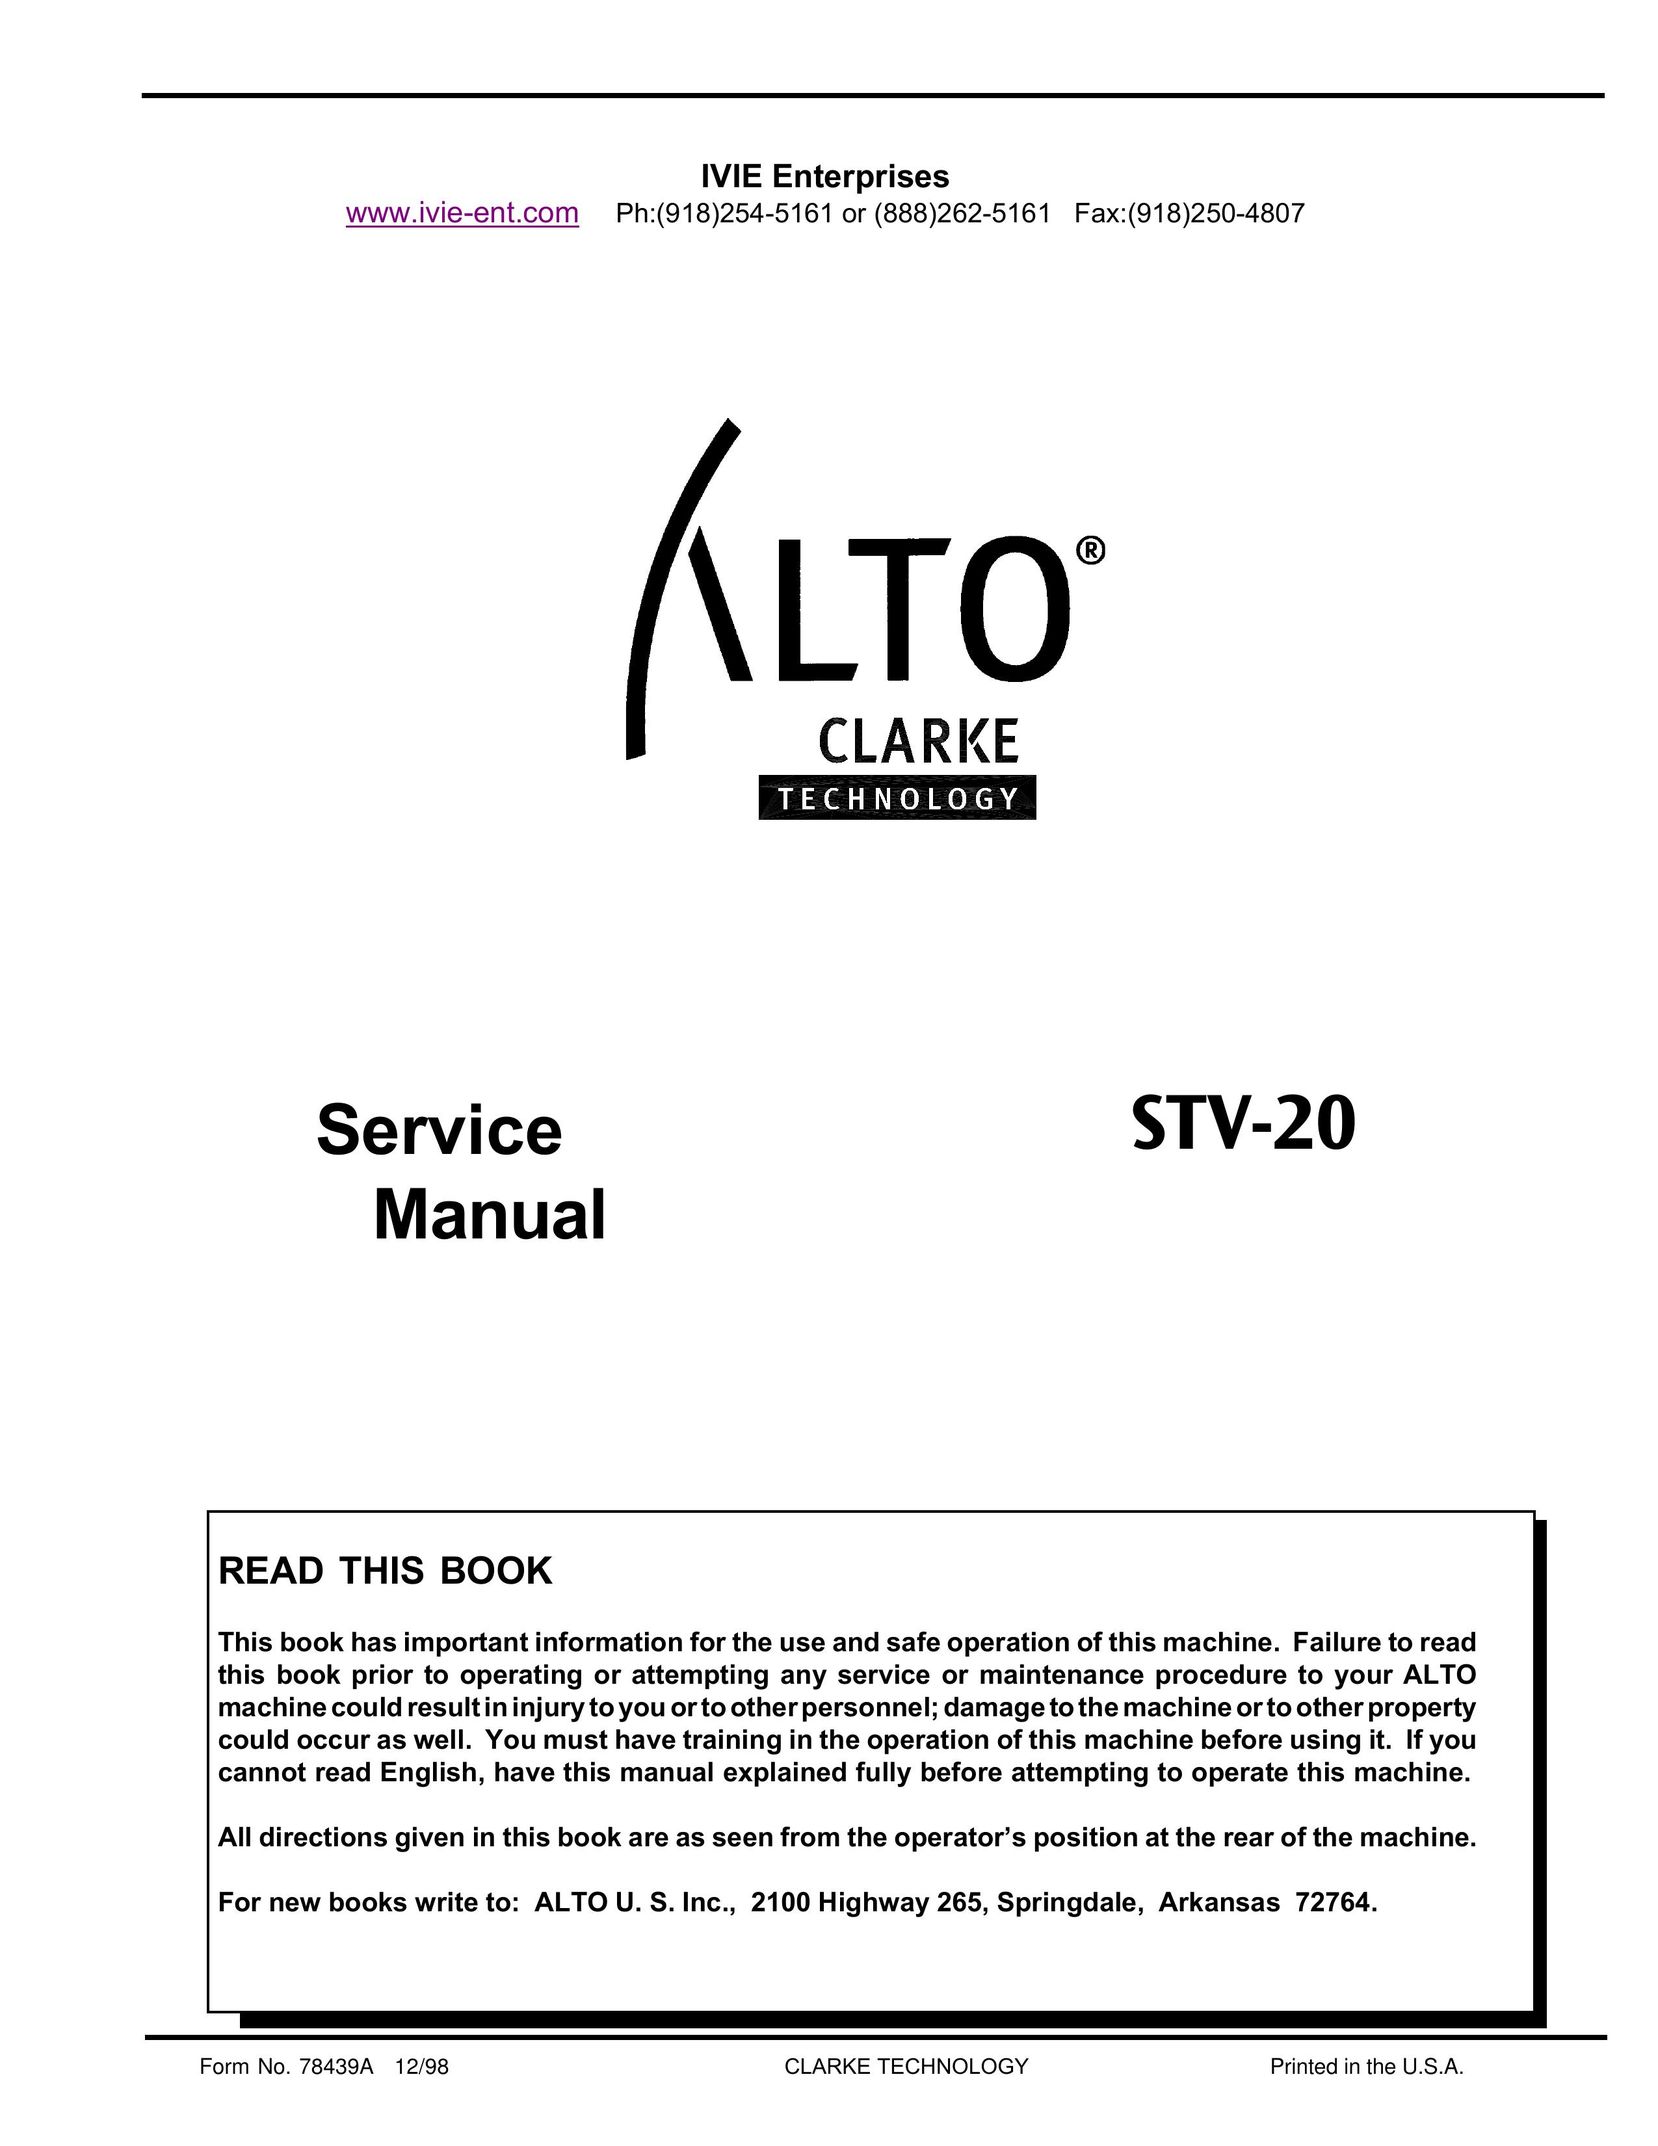 Clarke STV-20 Vacuum Cleaner User Manual